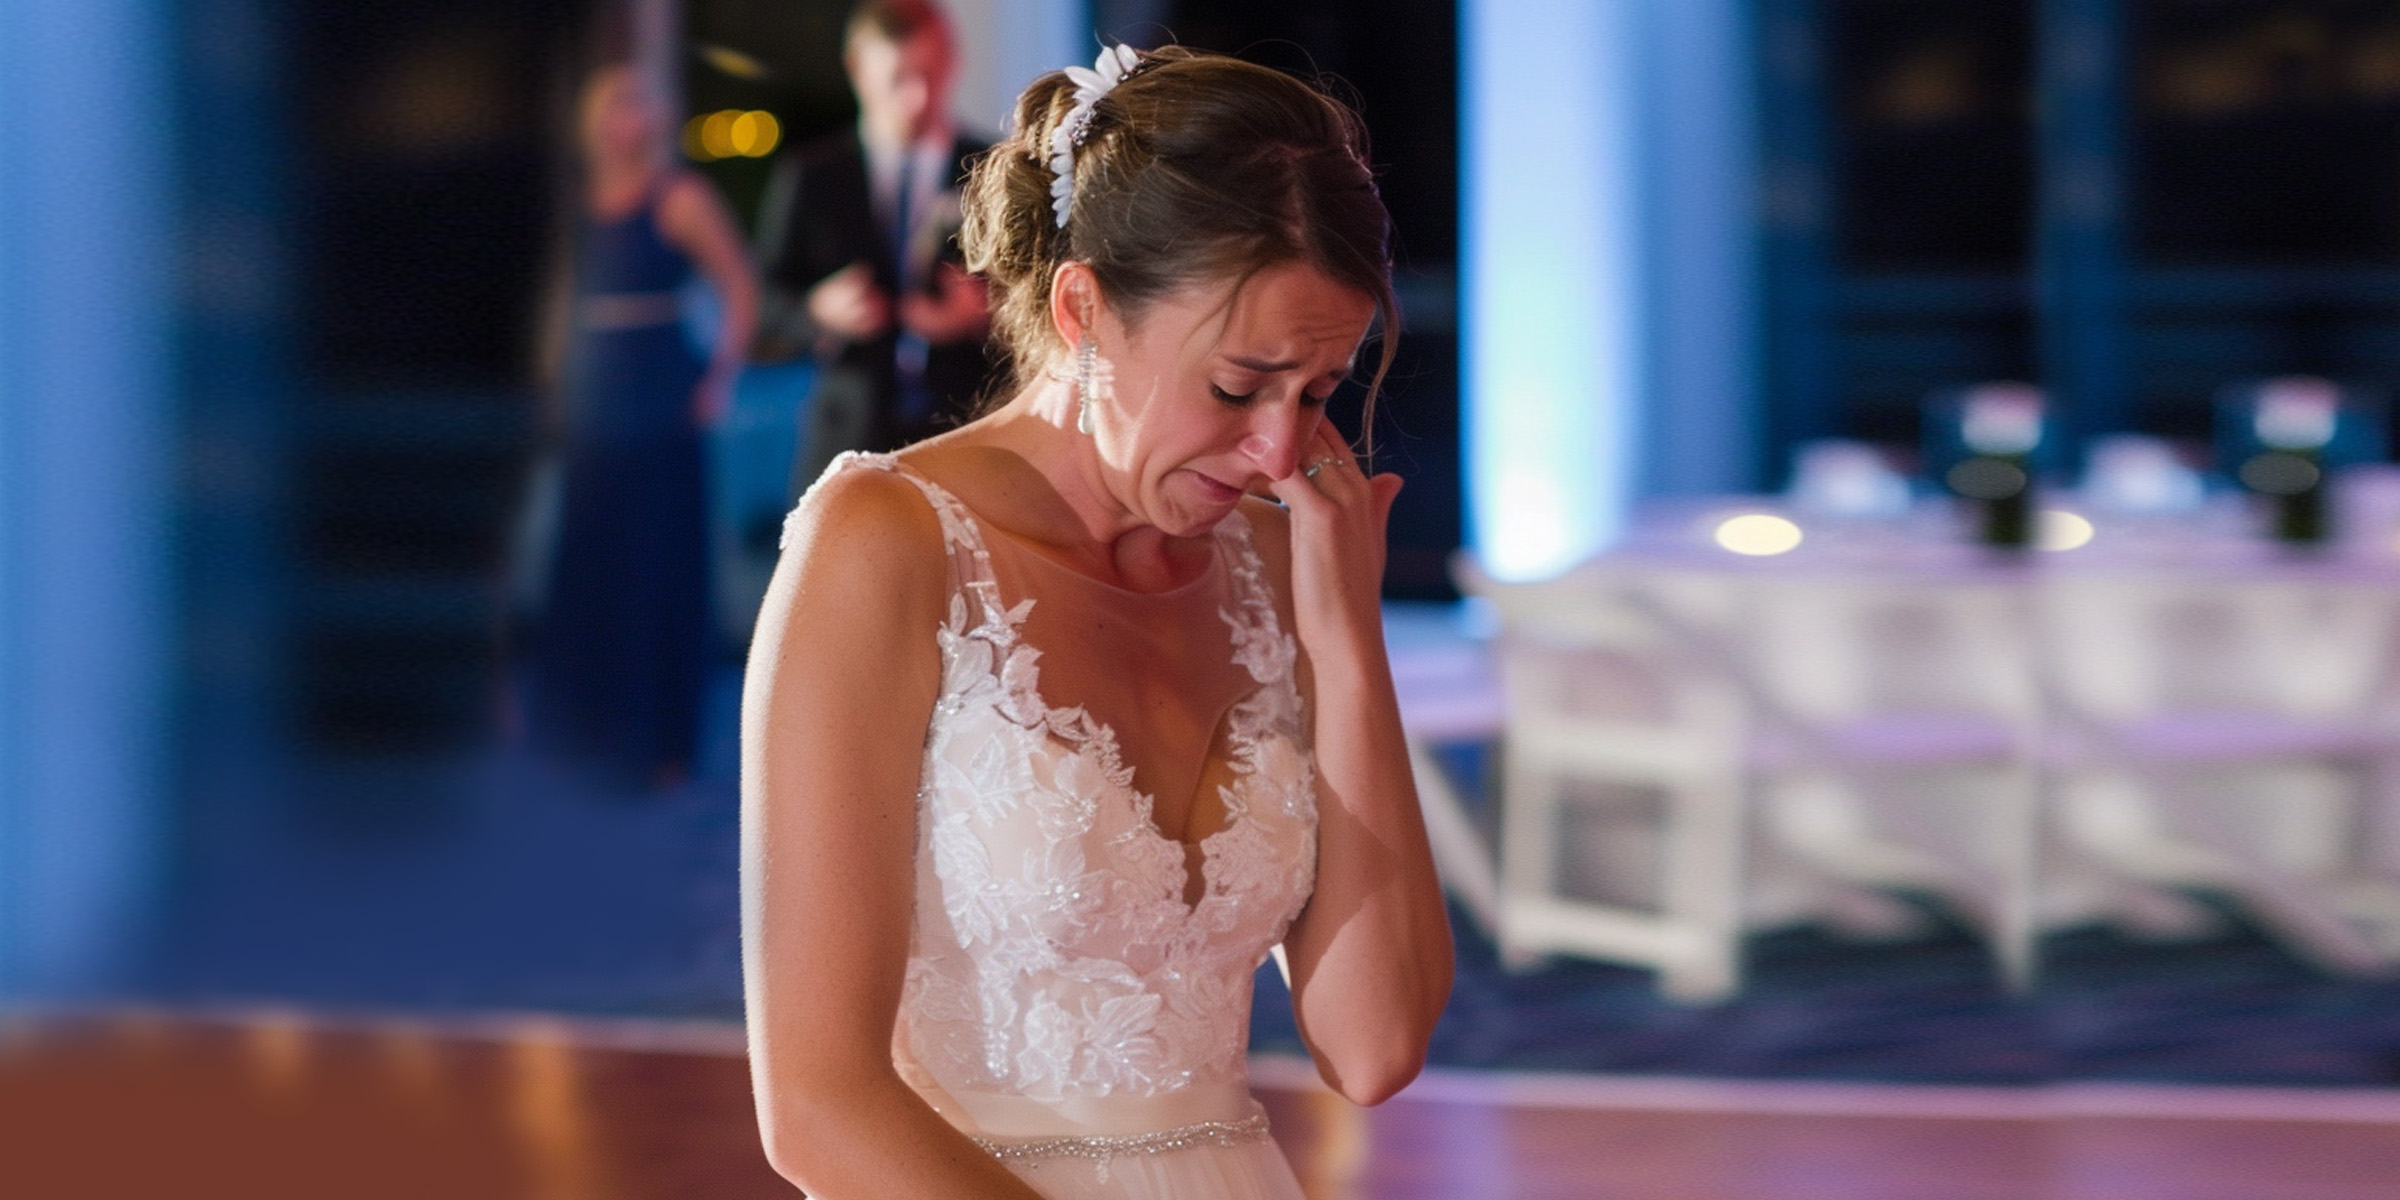 A bride crying | Source: Amomama